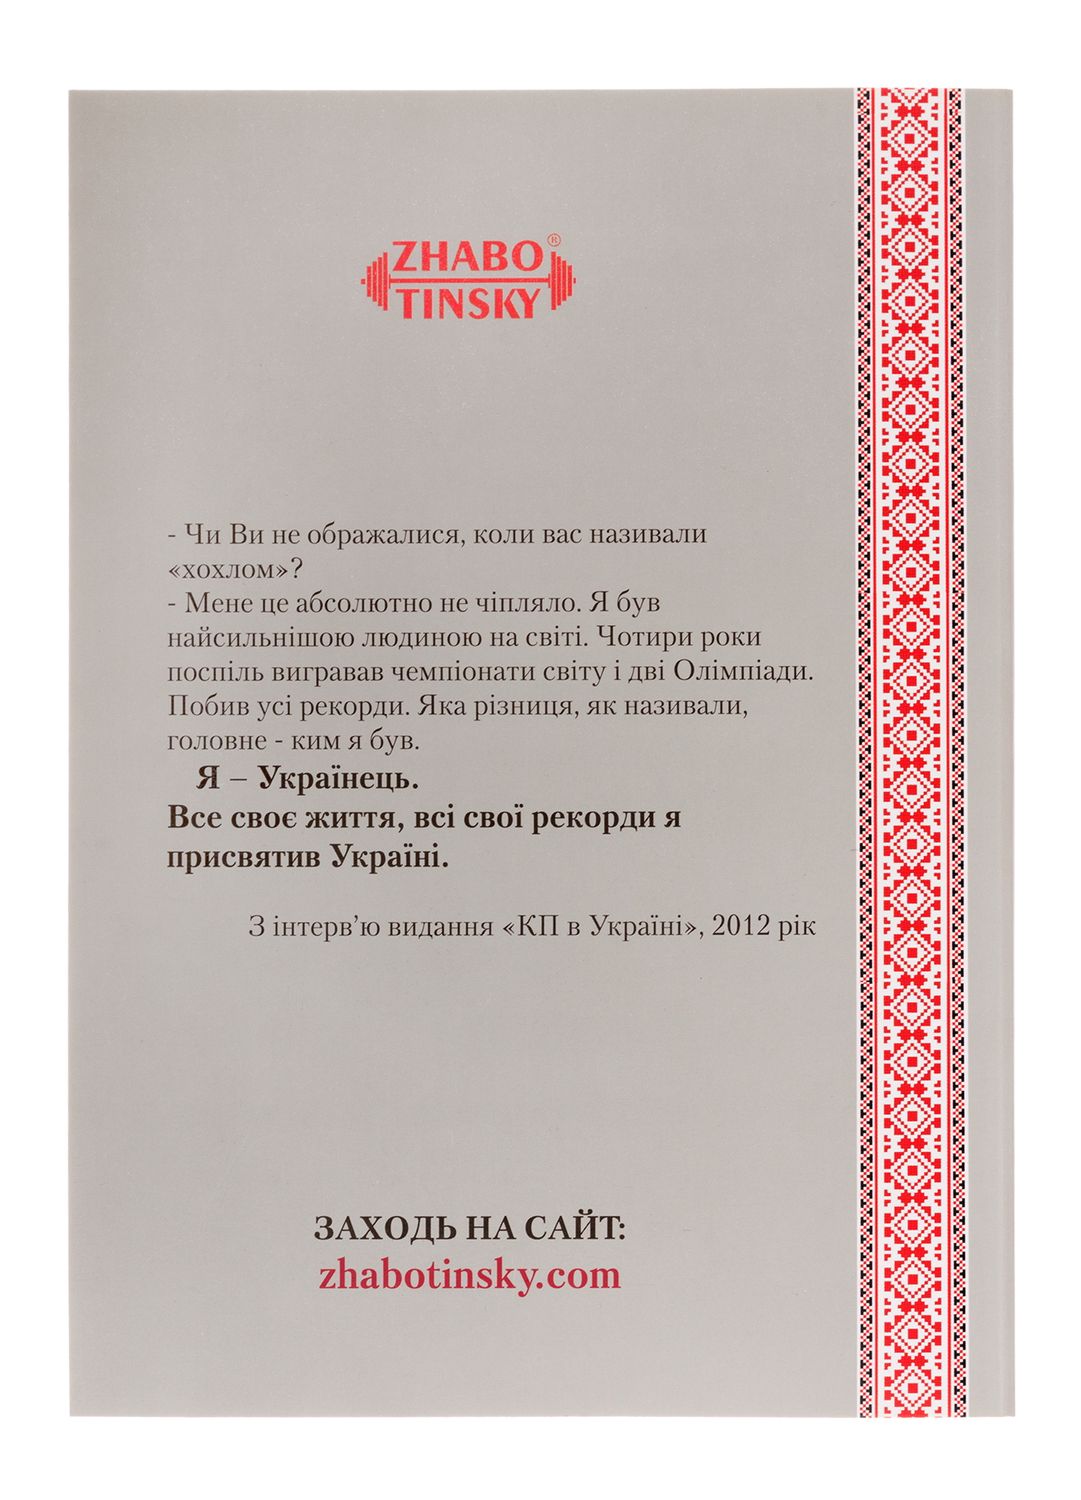 Leonid Zhabotinsky's book I am a Ukrainian - printed book